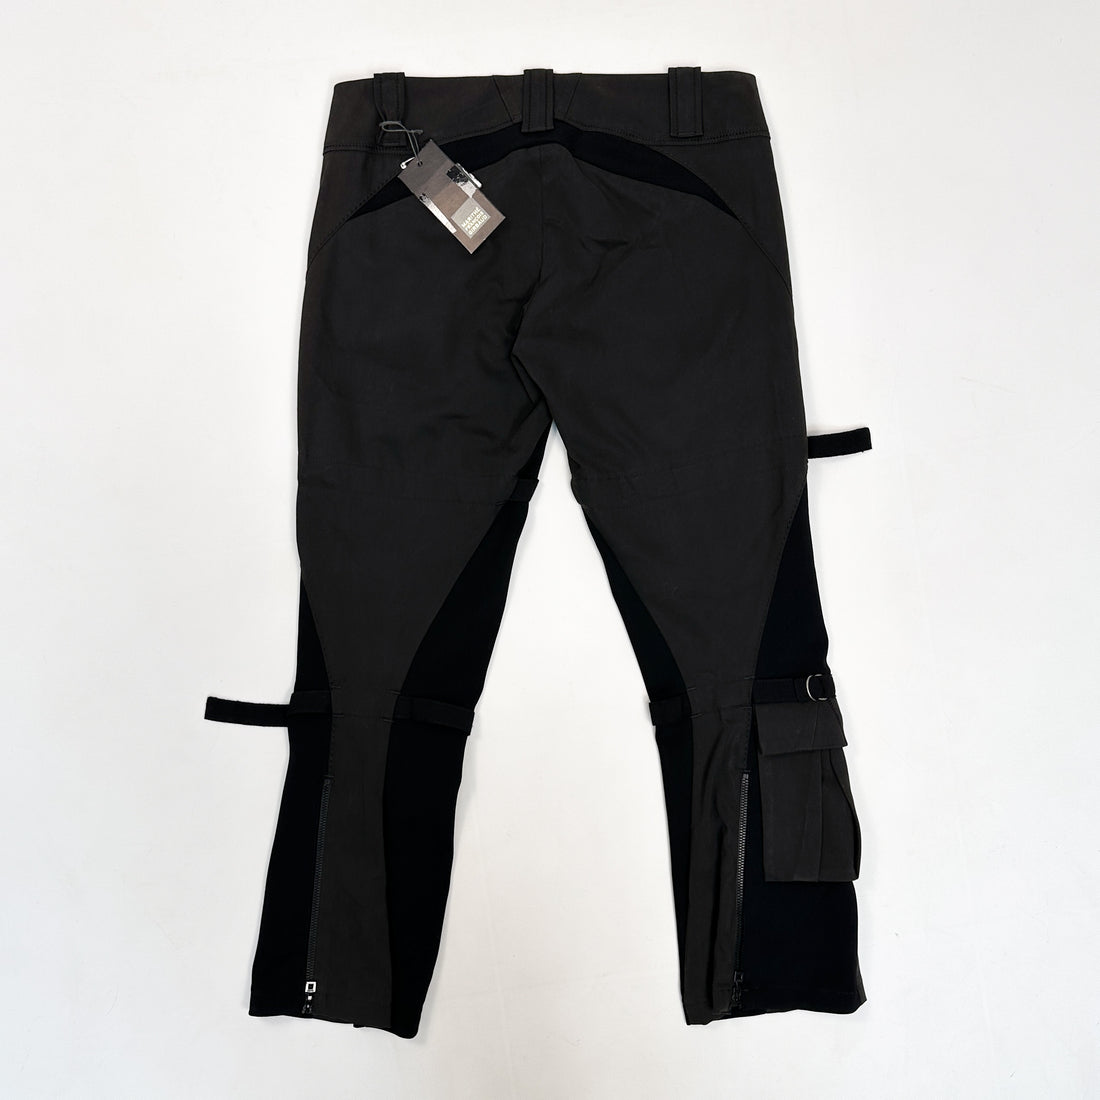 Marithé Francois Girbaud Bondage Dark Grey Pants 2000's